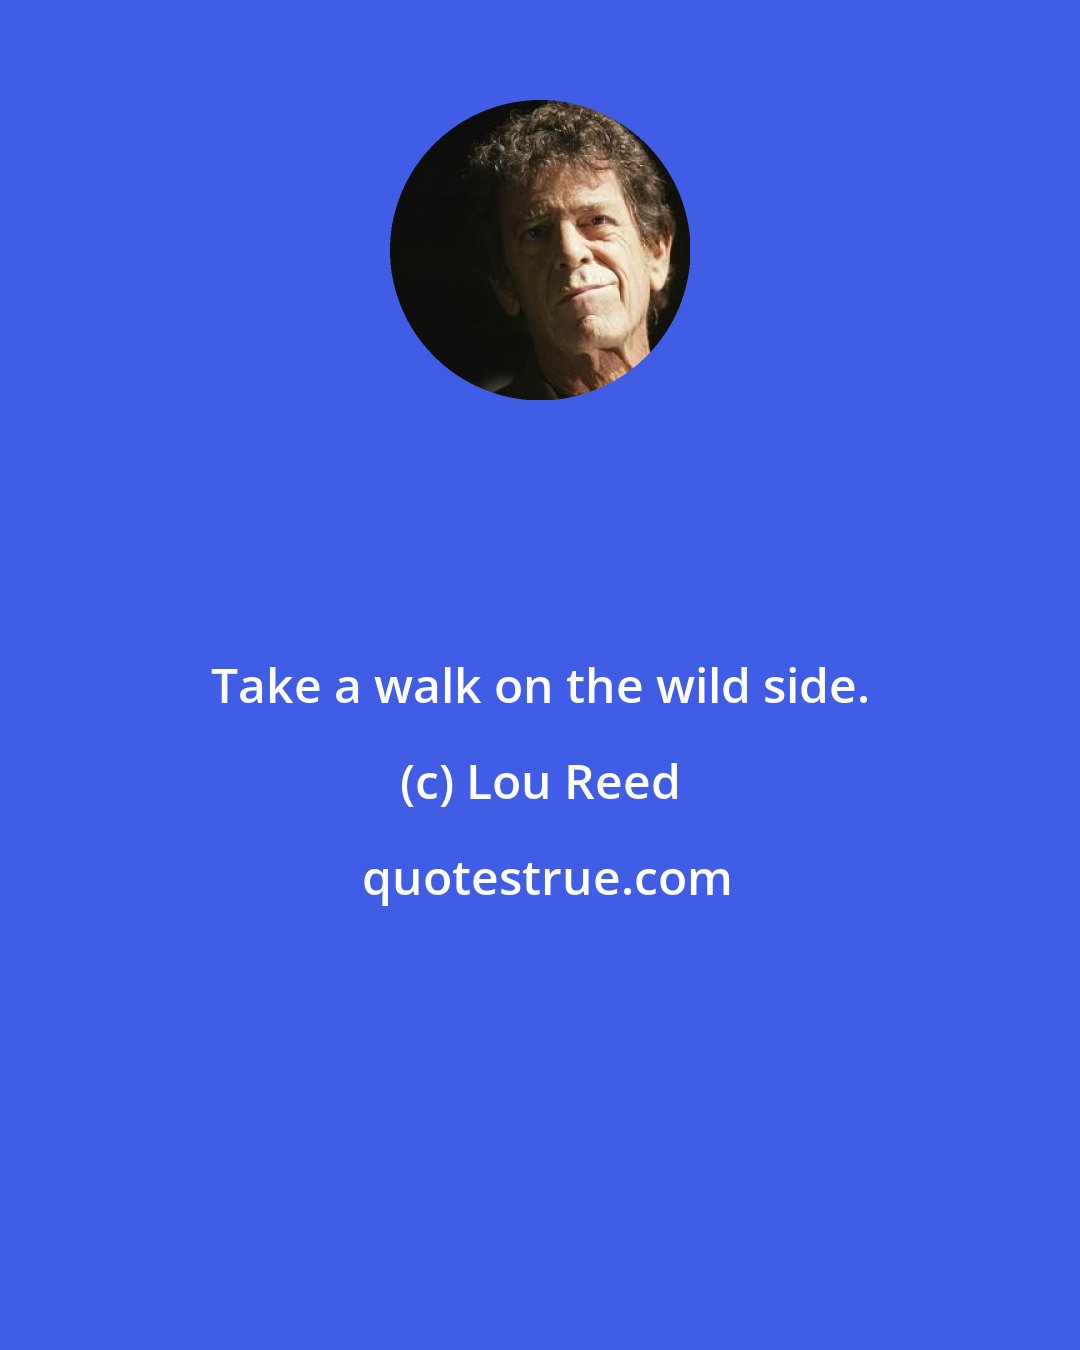 Lou Reed: Take a walk on the wild side.